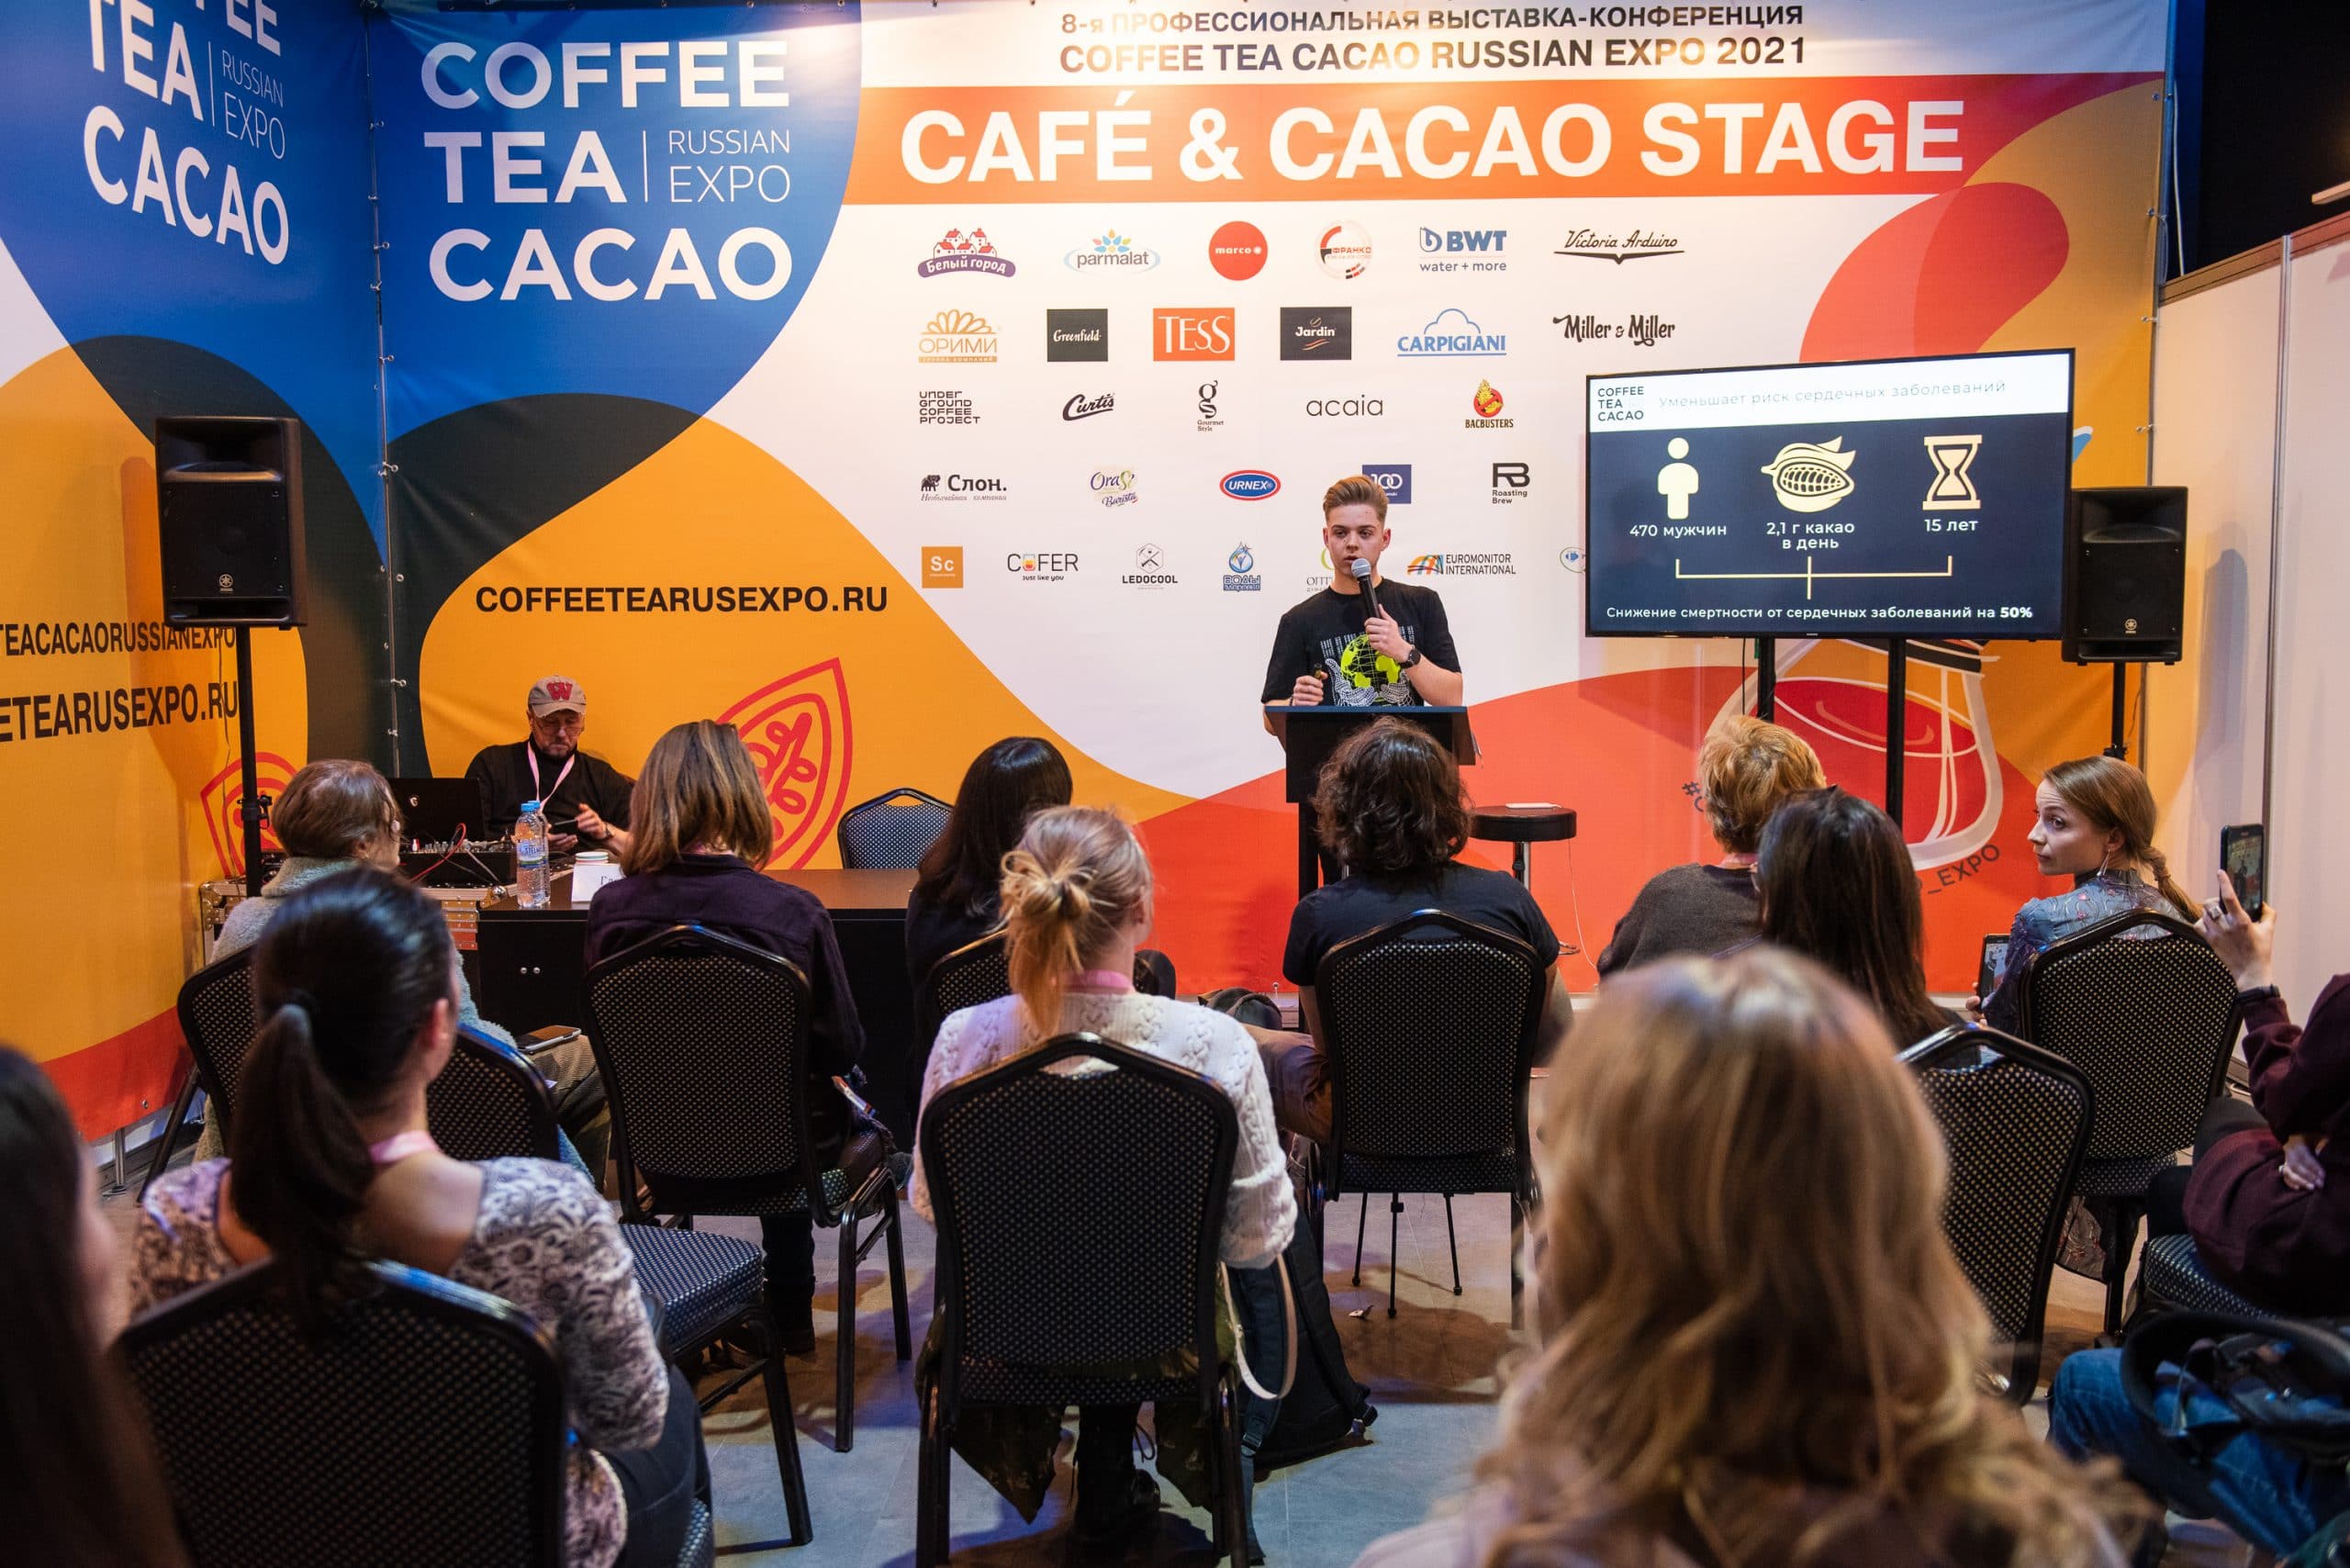 Cacao expo. Coffee Tea Cacao Russian Expo. Coffee Tea Cacao Expo 2023. Чай кофе какао выставка 2023. Coffee Tea Cacao Expo logo.